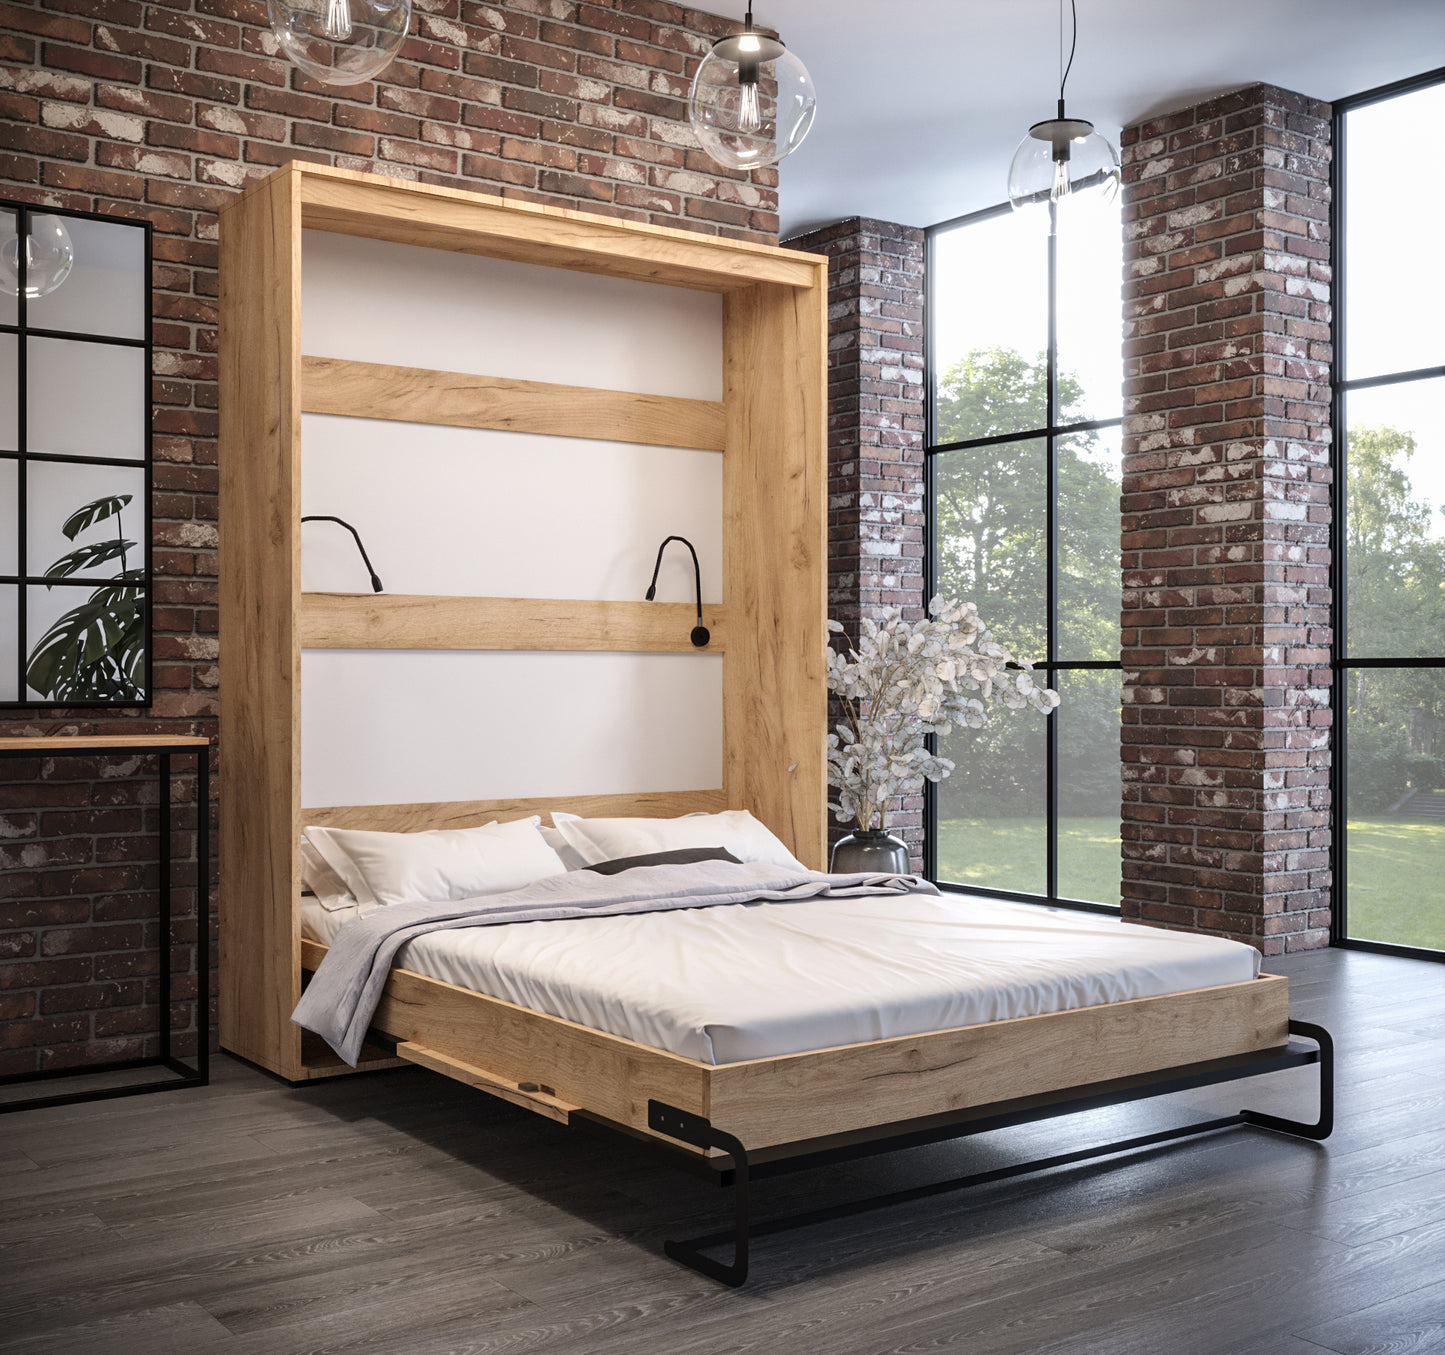 CASA LOFT BED - Vertical Bed Frame Space Saver Modern Led Lights Included 4 Sizes